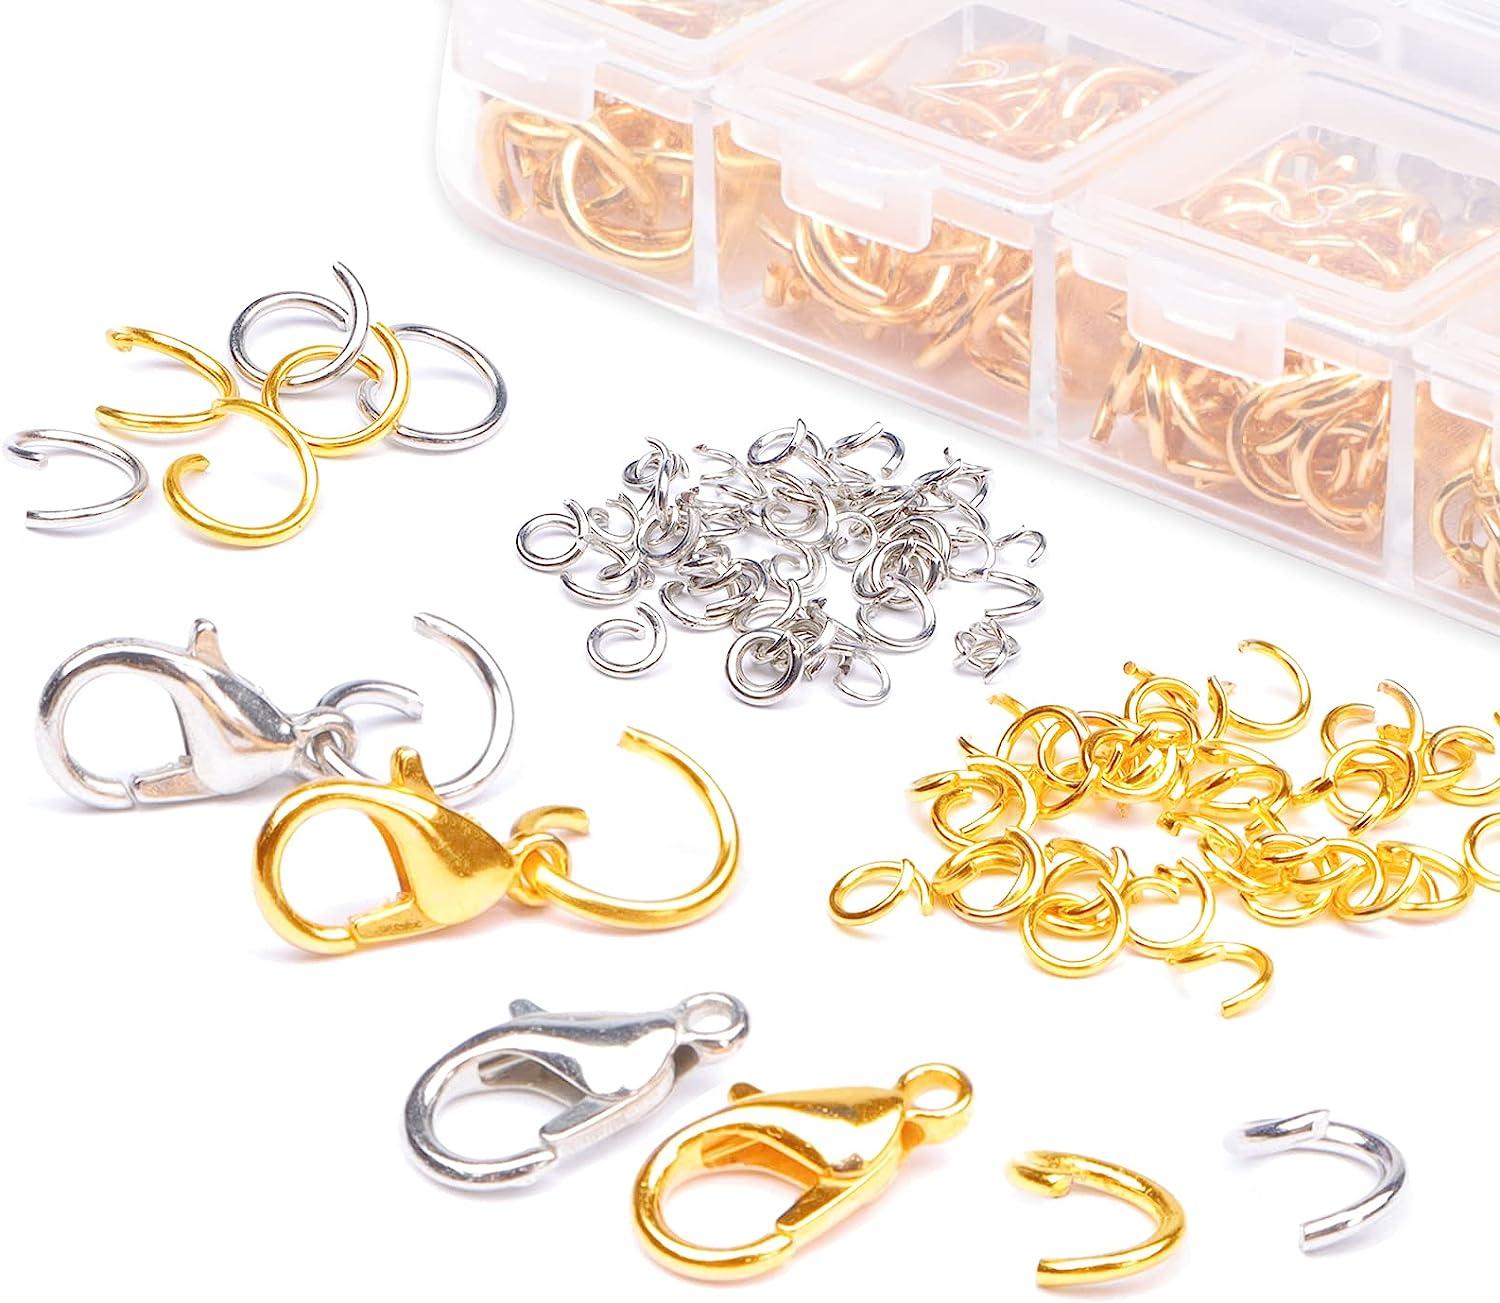 YUGDRUZY Jump Rings for Jewelry Making Kit 1200 pcs Open Jump